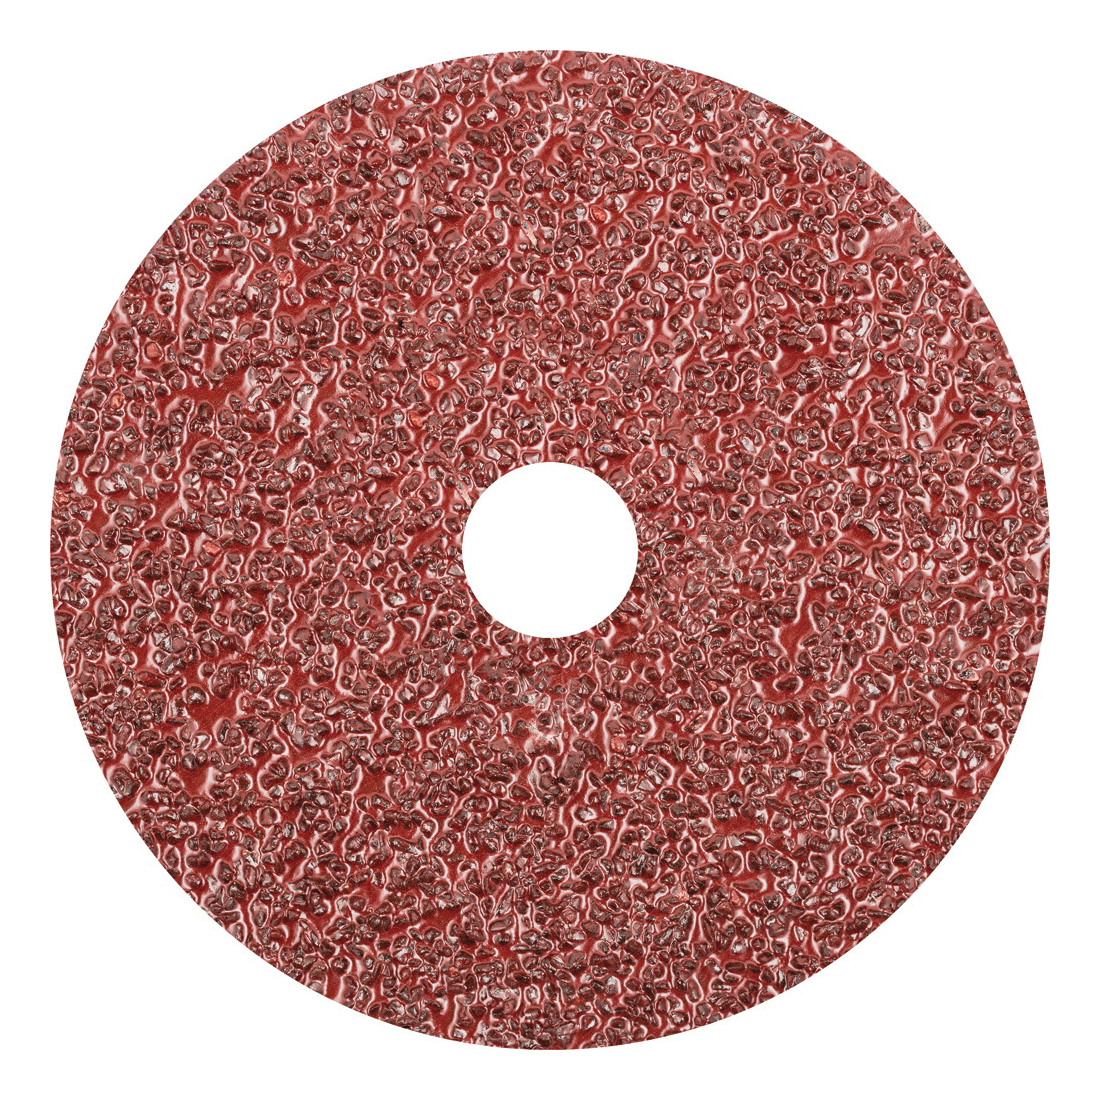 PFERD 62501 Standard Coated Abrasive Disc, 5 in Dia, 7/8 in Center Hole, 16 Grit, Aluminum Oxide Abrasive, Arbor Attachment